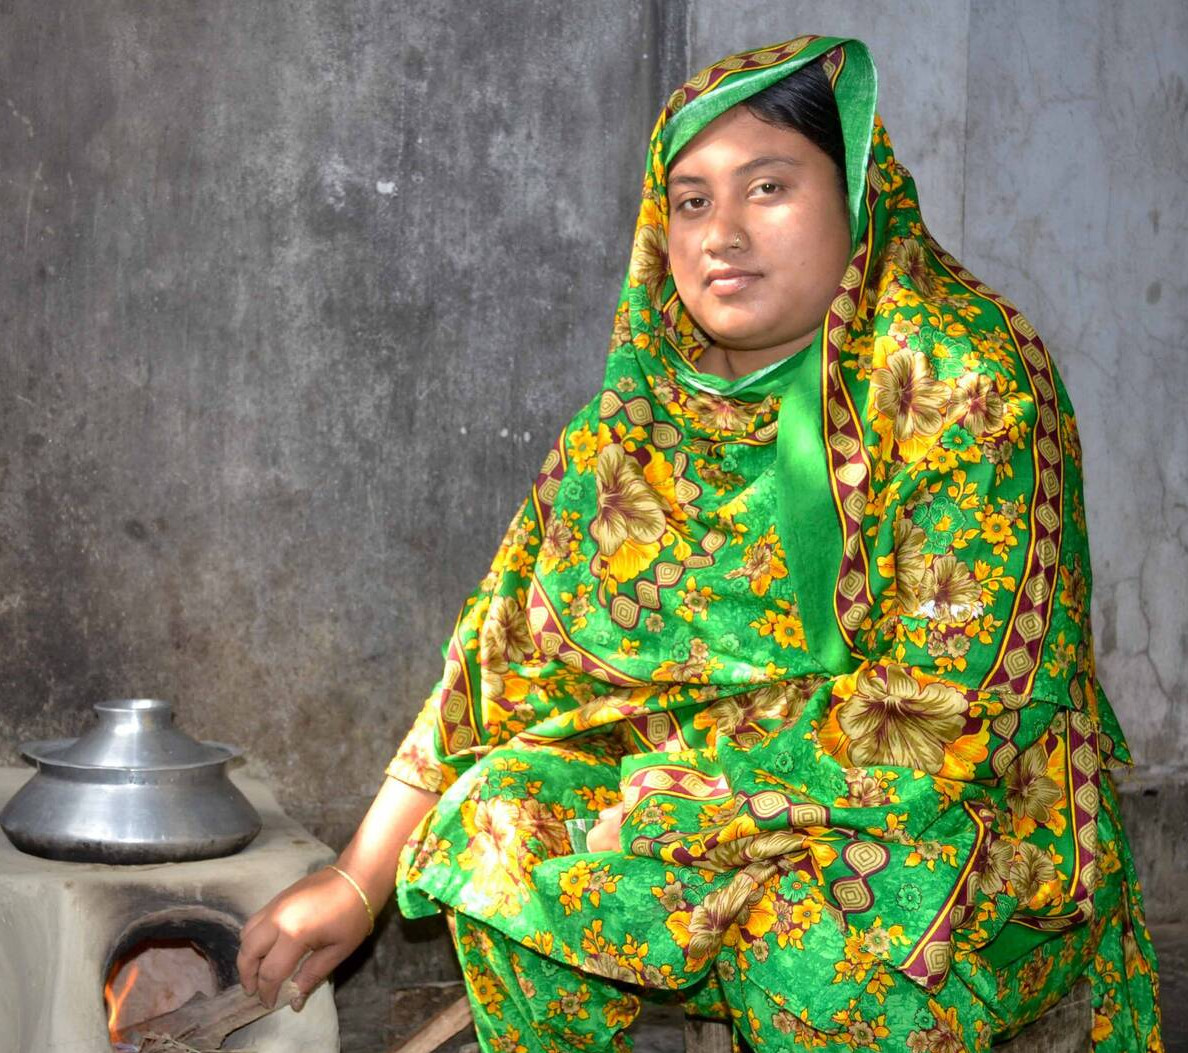 Saubere Kochöfen in Bangladesch